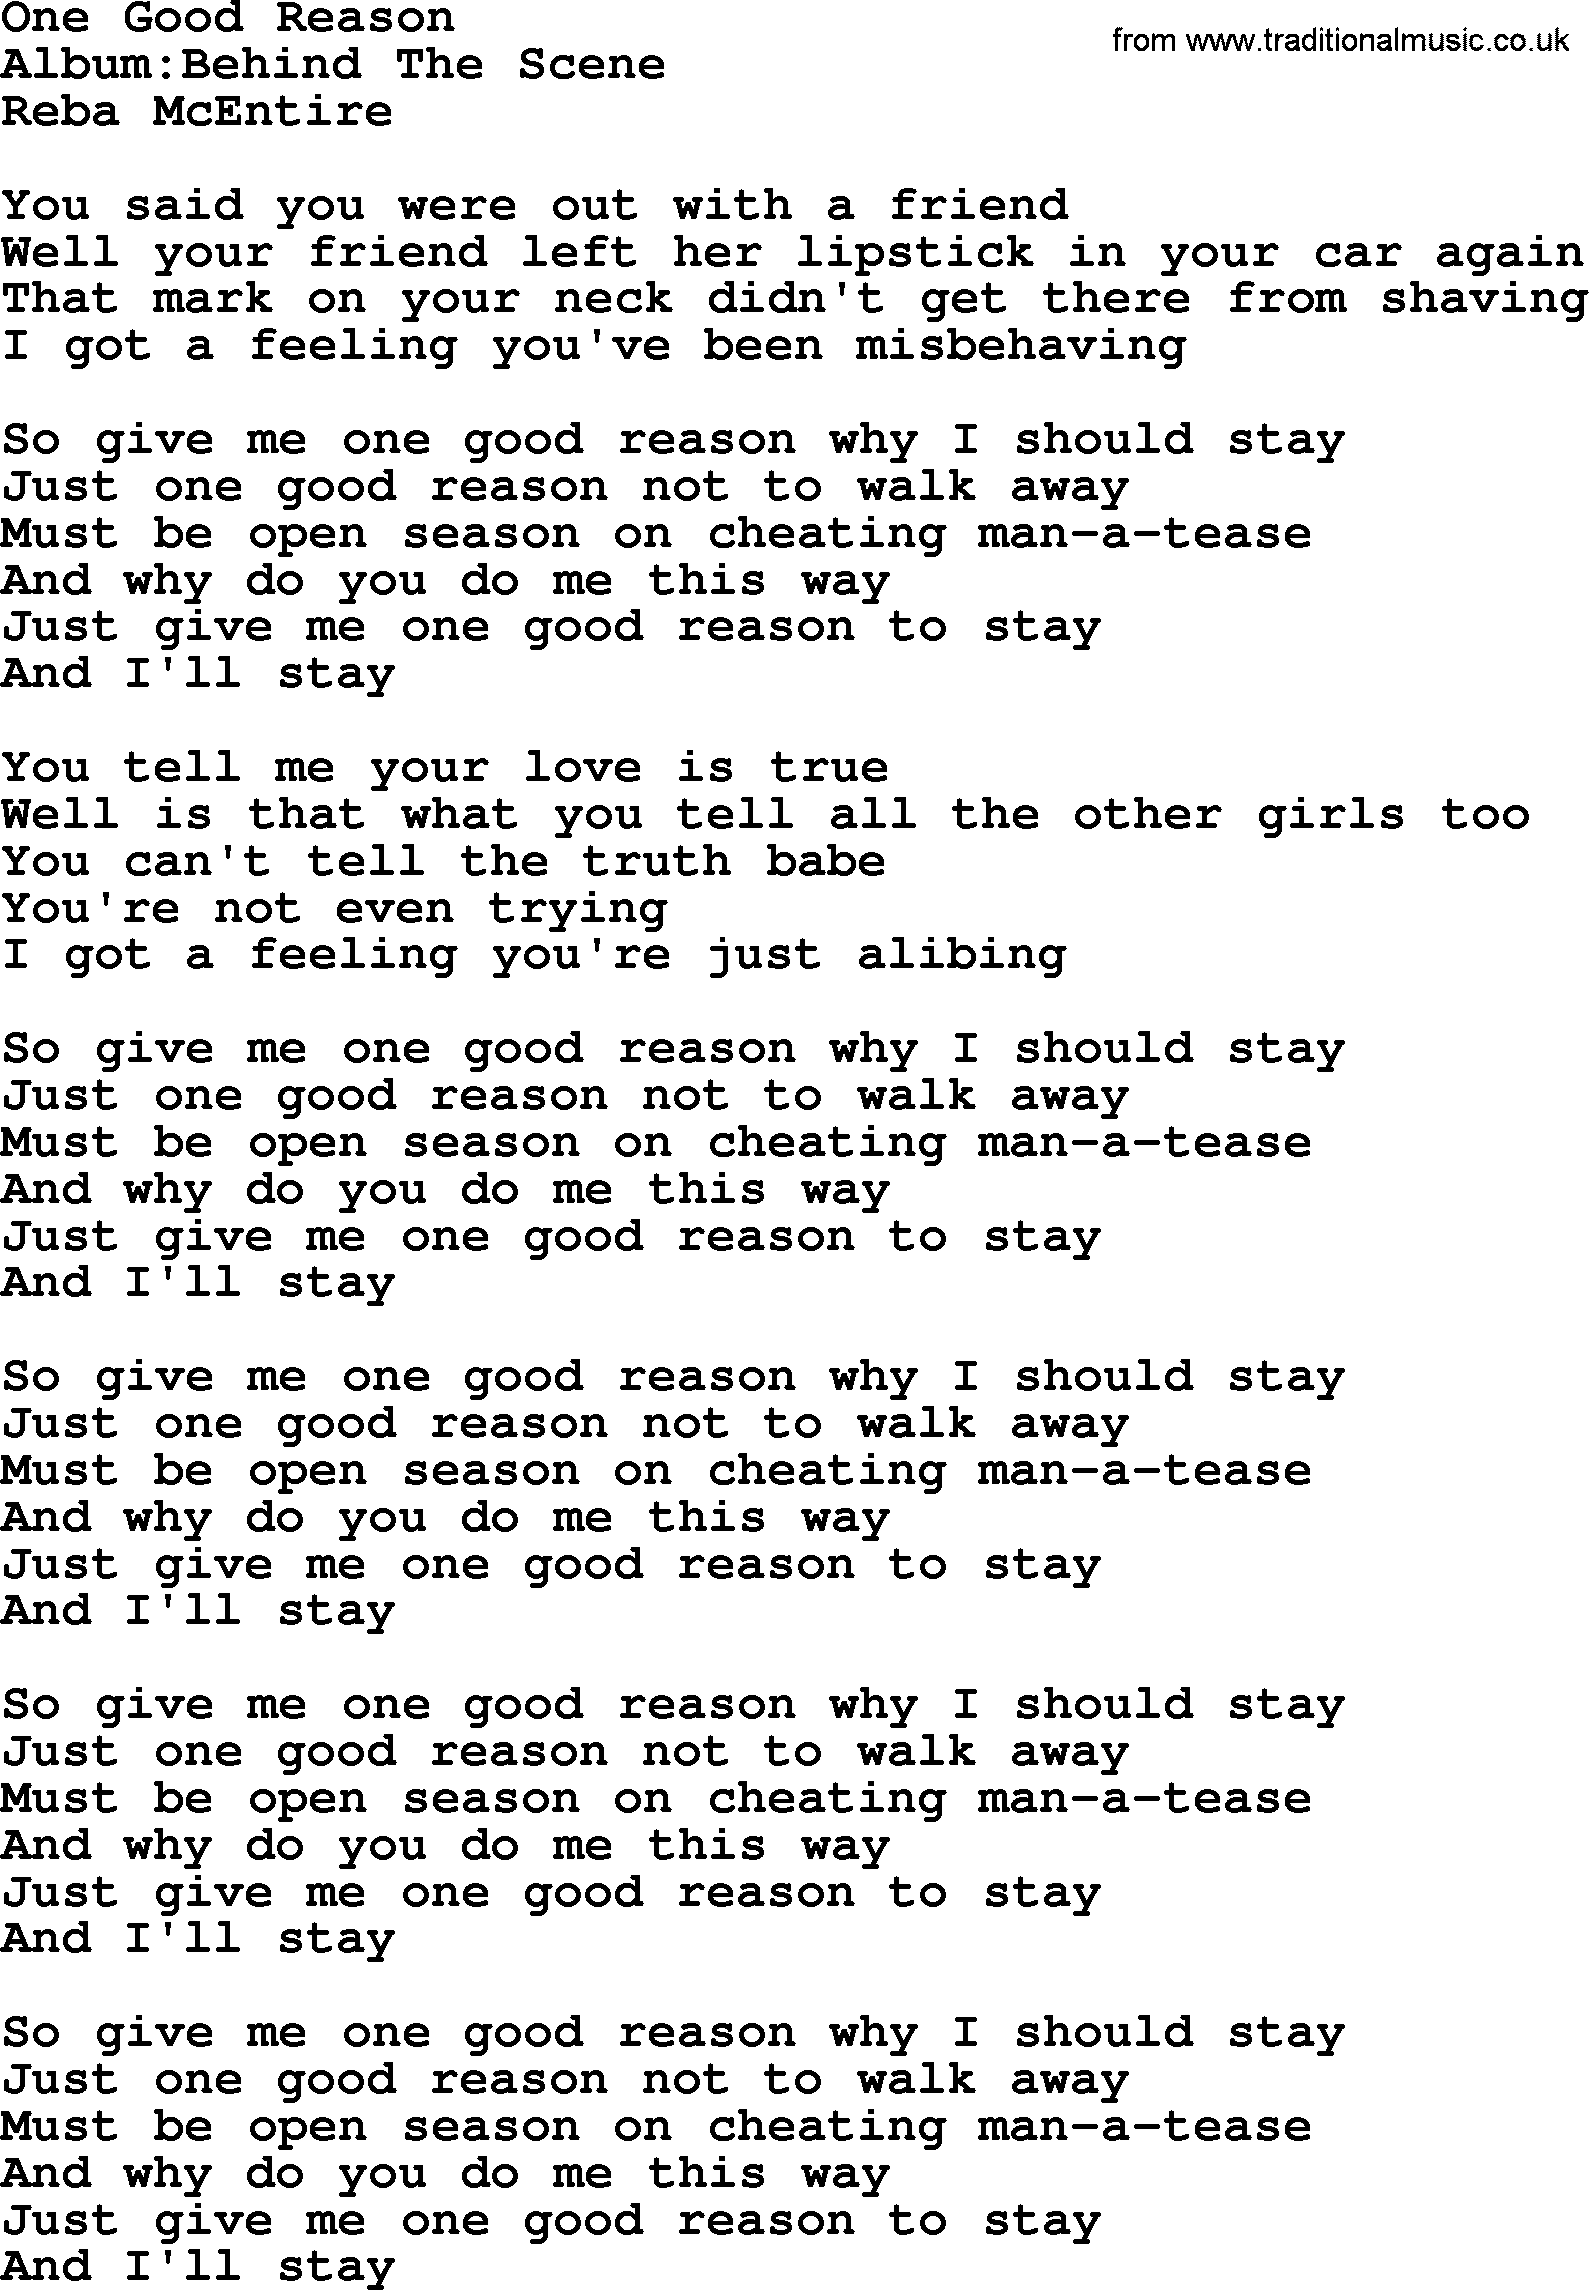 Reba McEntire song: One Good Reason lyrics